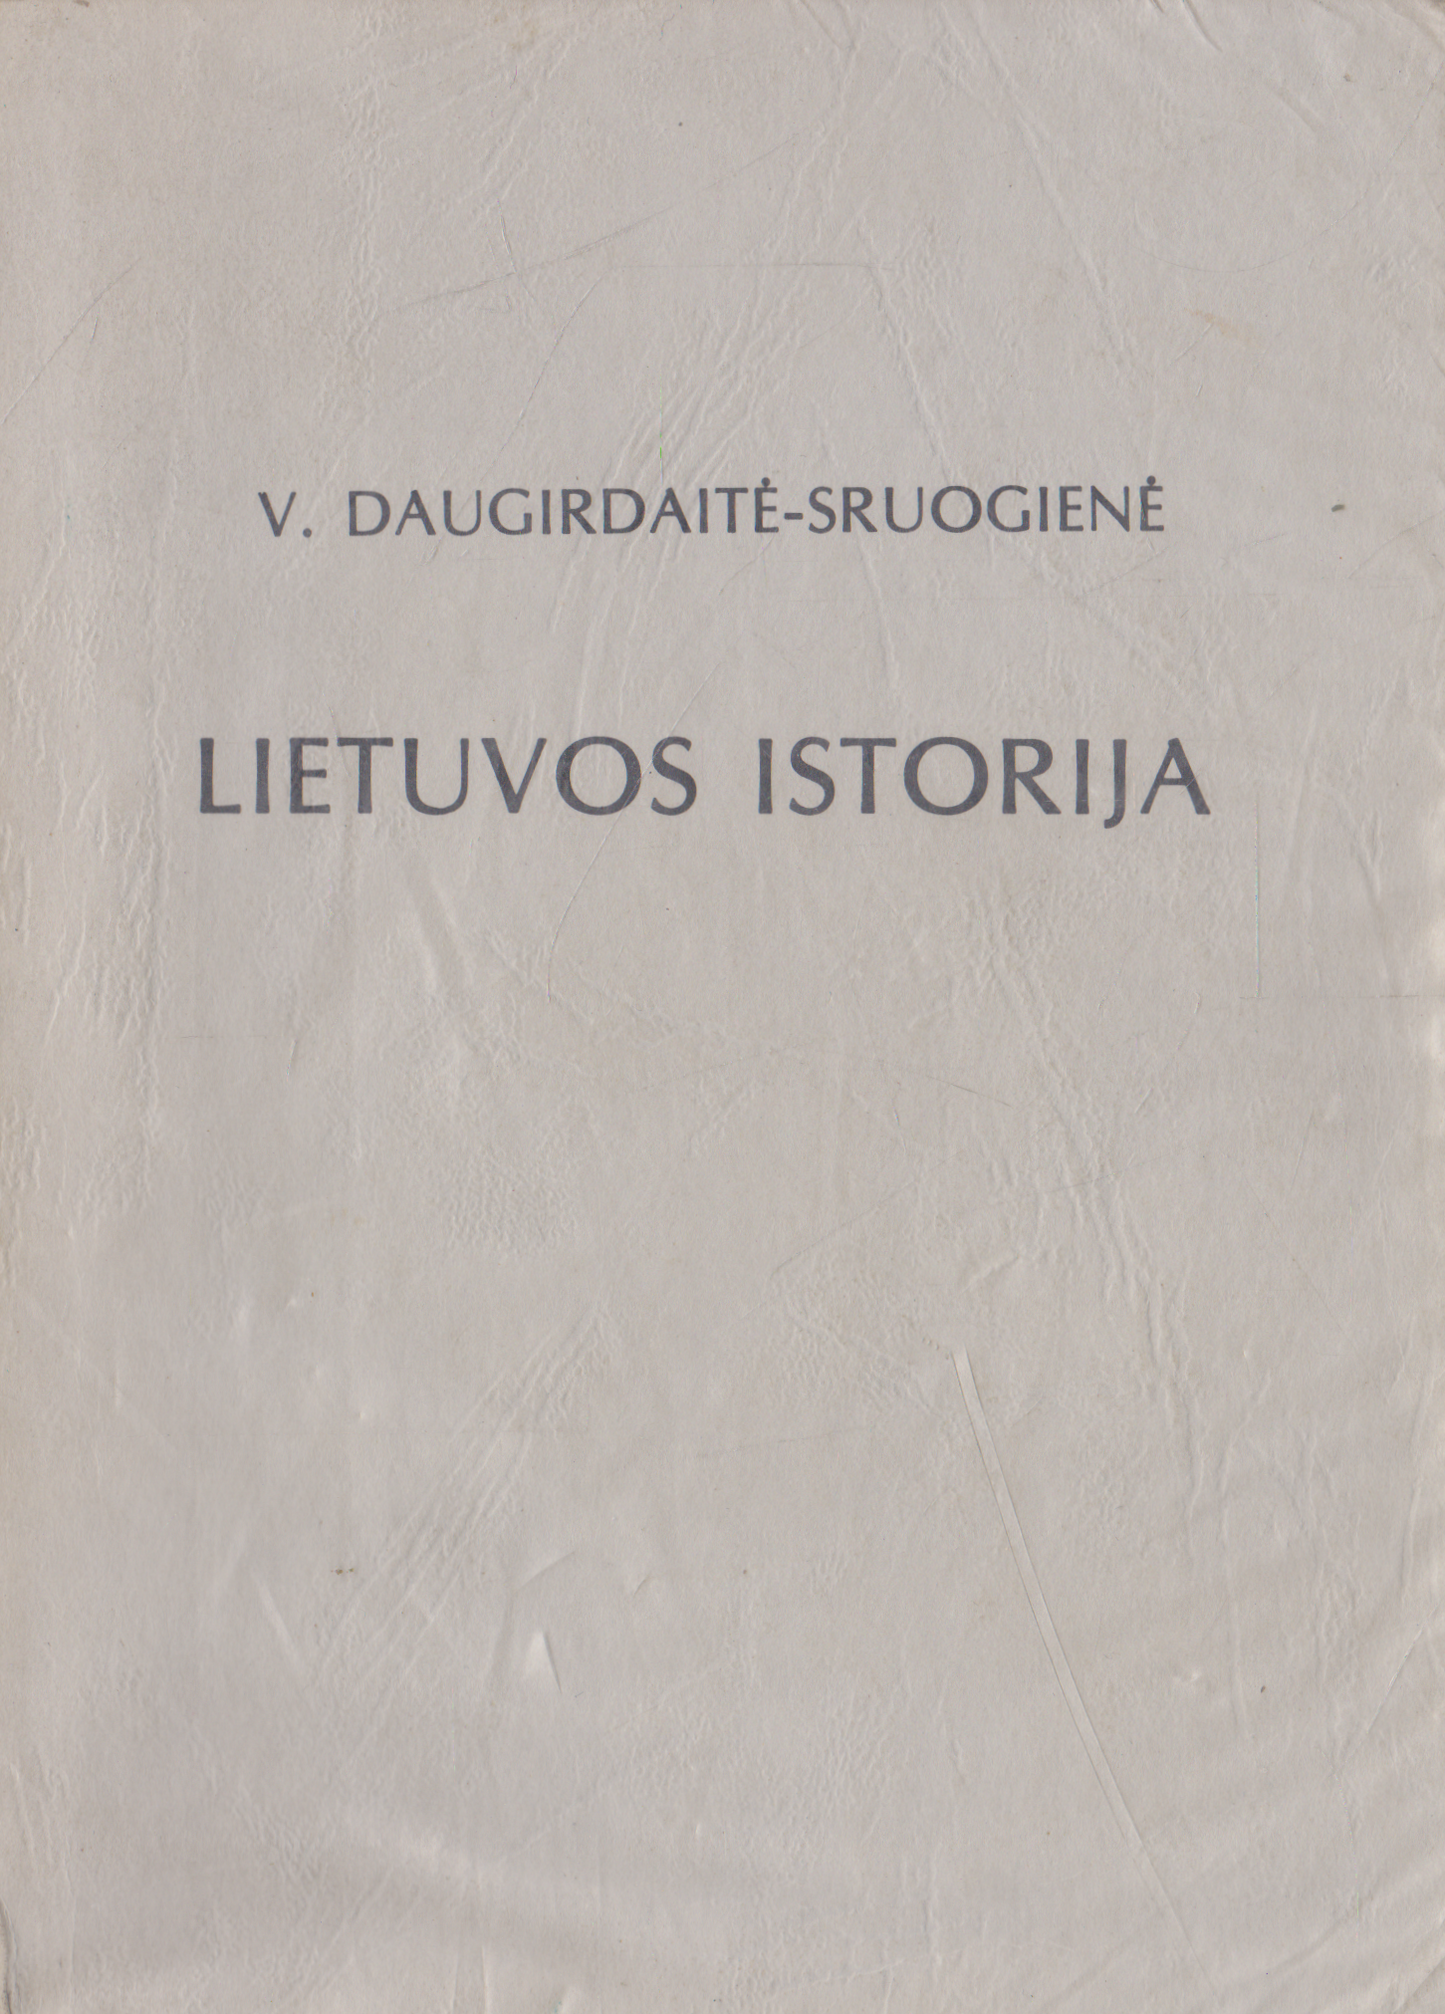 V. Daugirdaitė-Sruogienė - Lietuvos istorija, 1987 m., Chicago